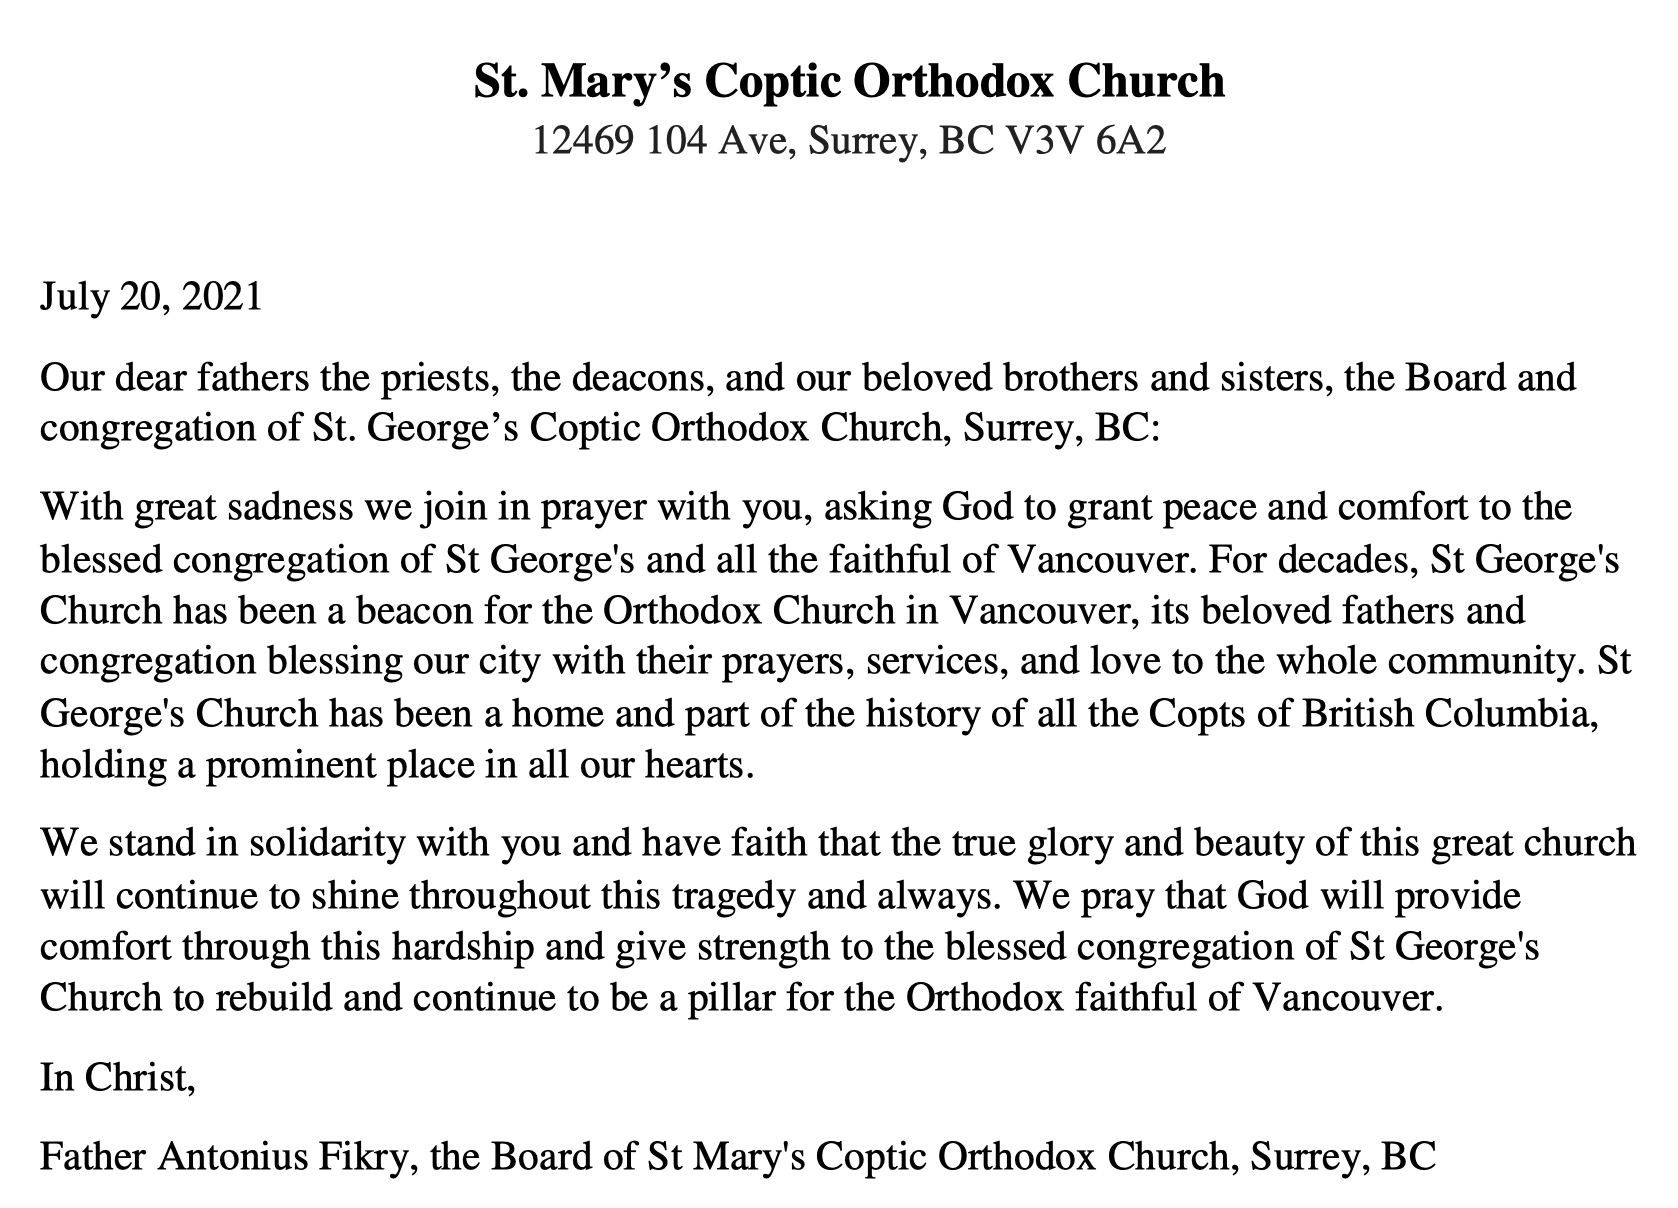 St. Mary Coptic Orthodox Church in Surrey, BC